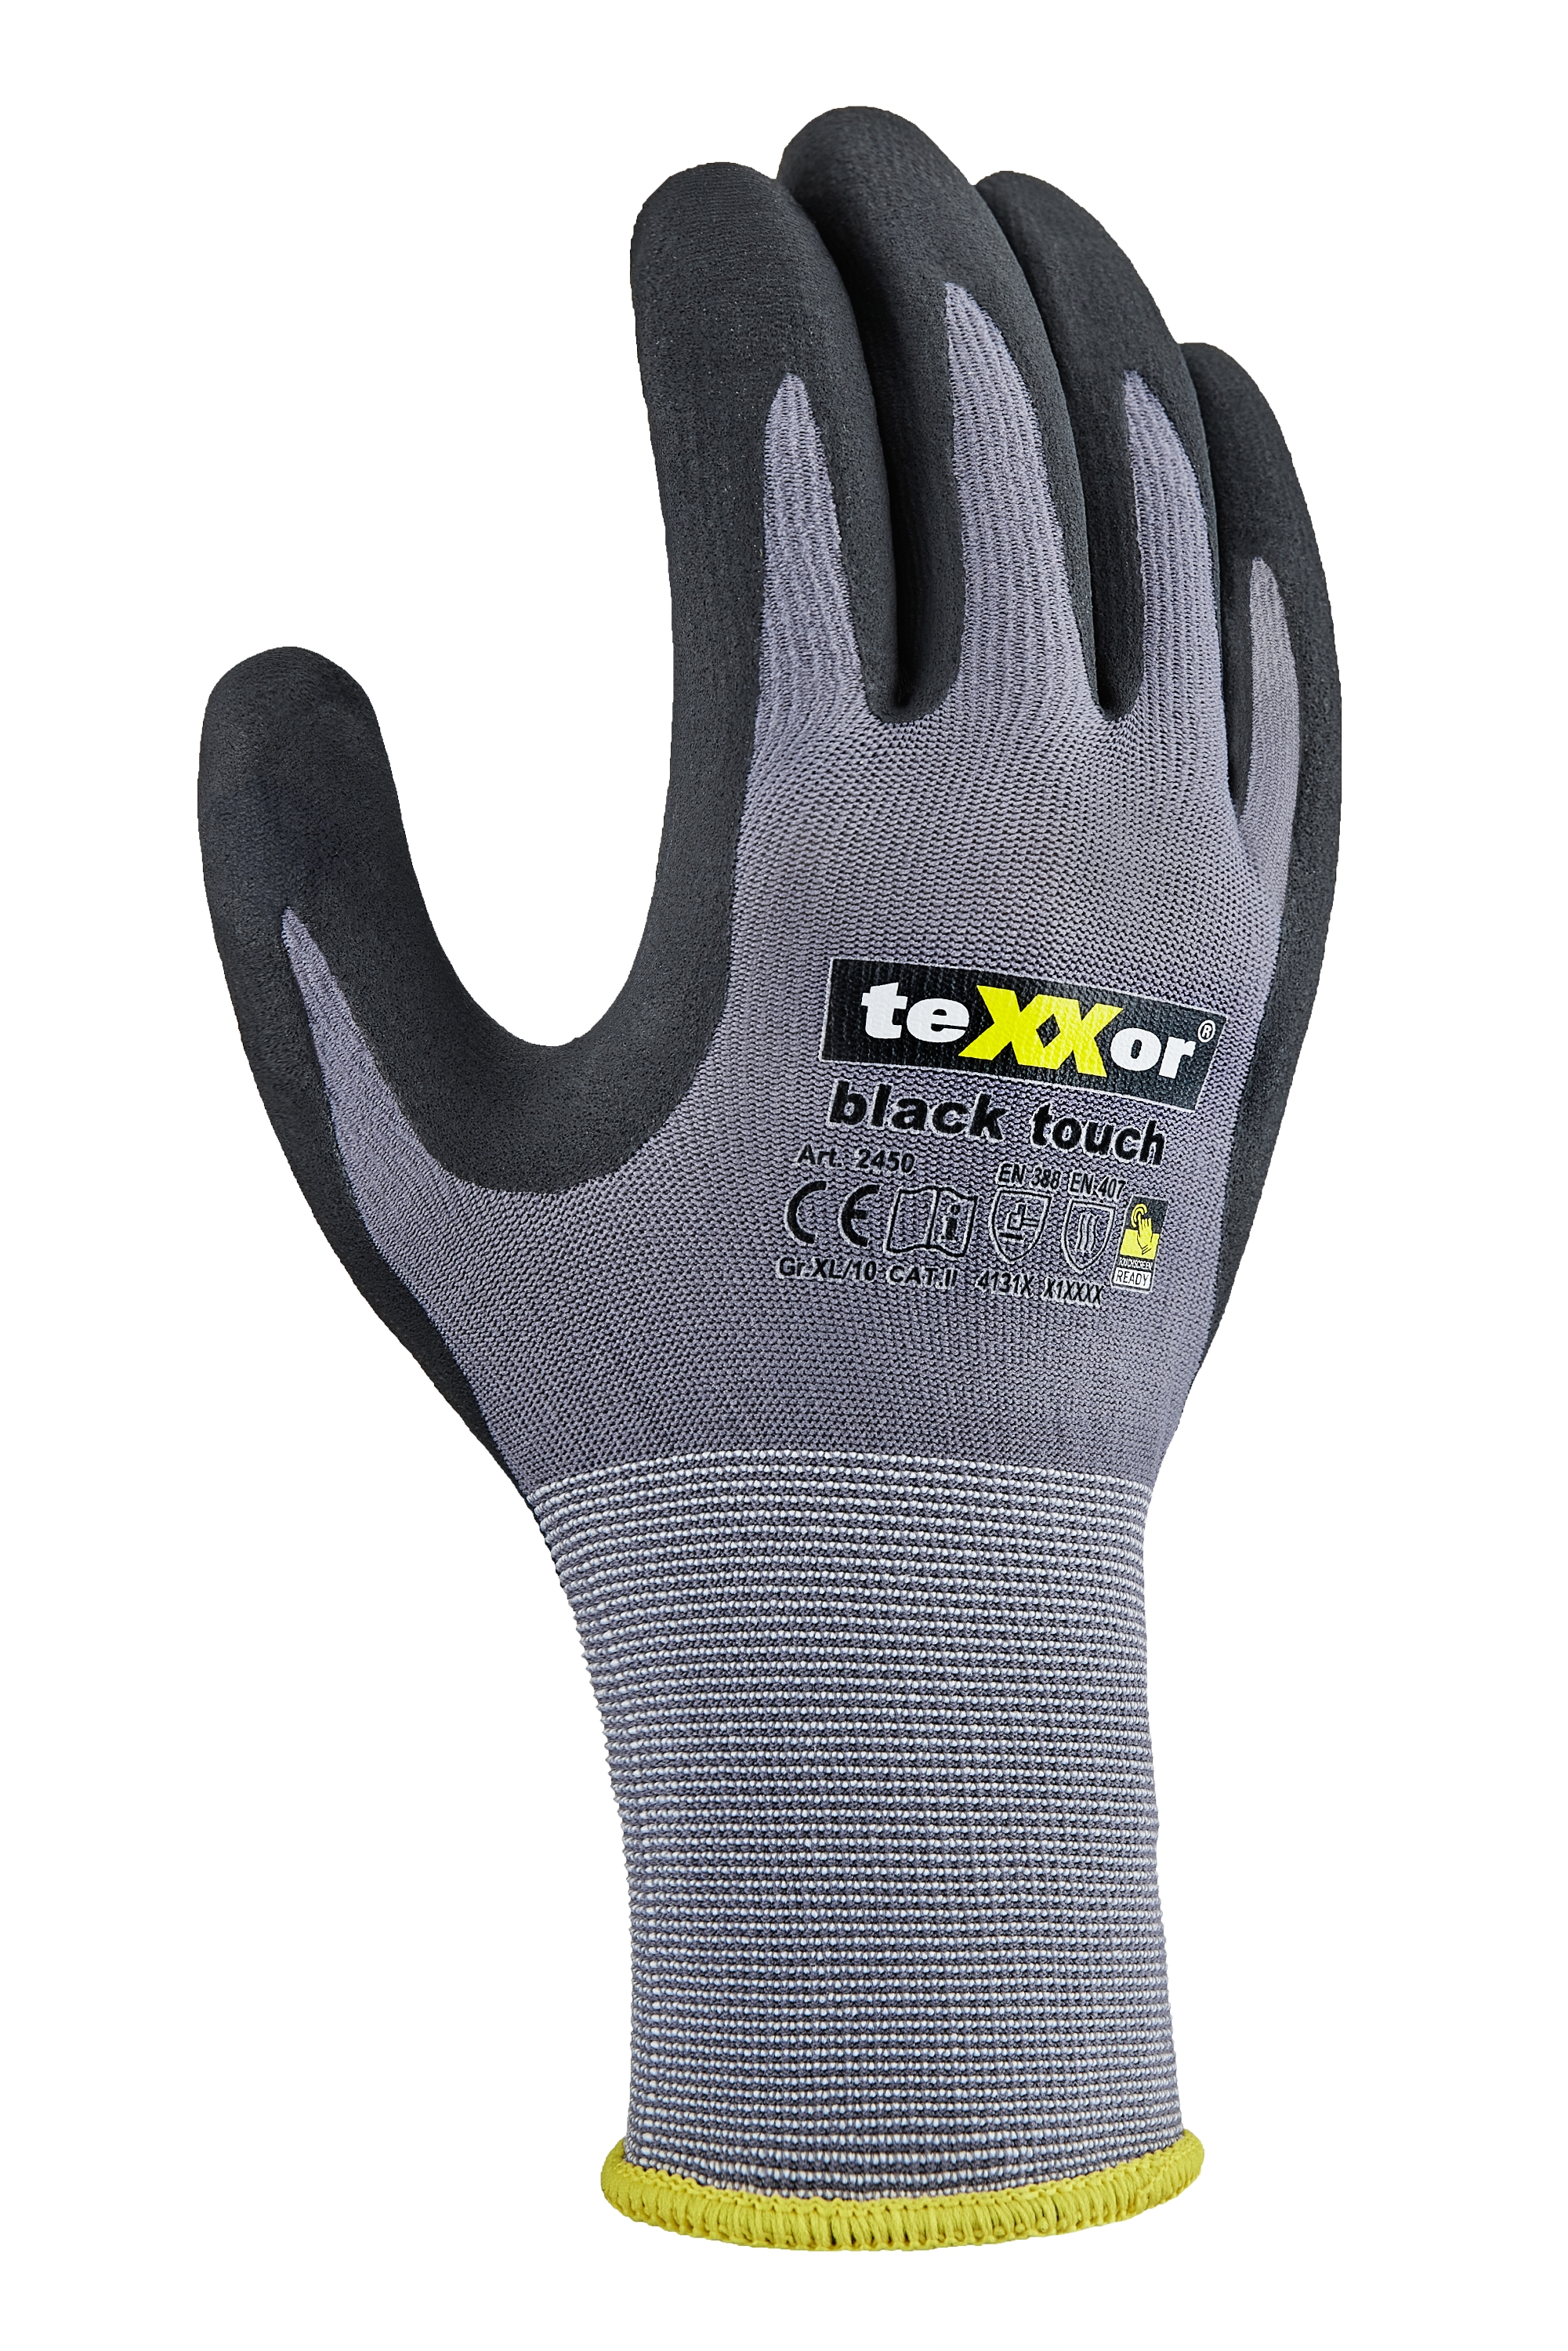 Nylon-Strickhandschuhe touch® black grau/schwarz teXXor®